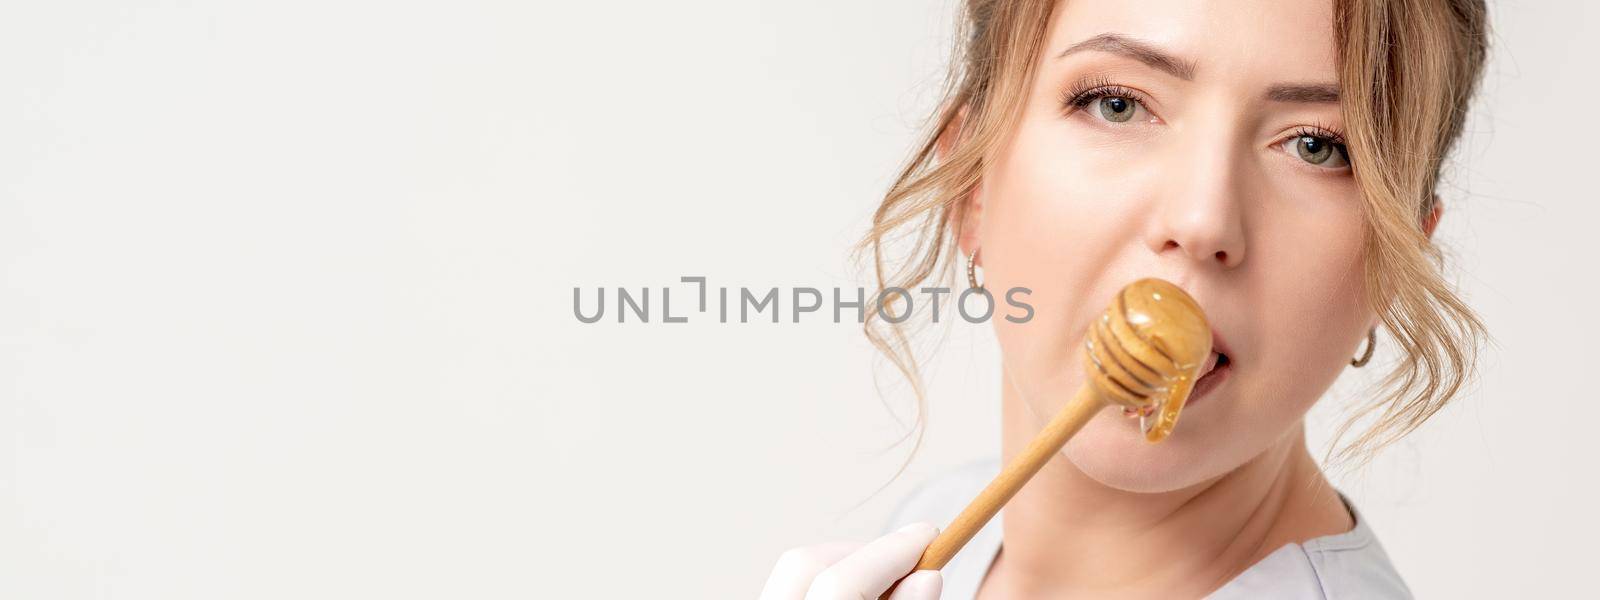 Woman eating honey with wooden spoon by okskukuruza